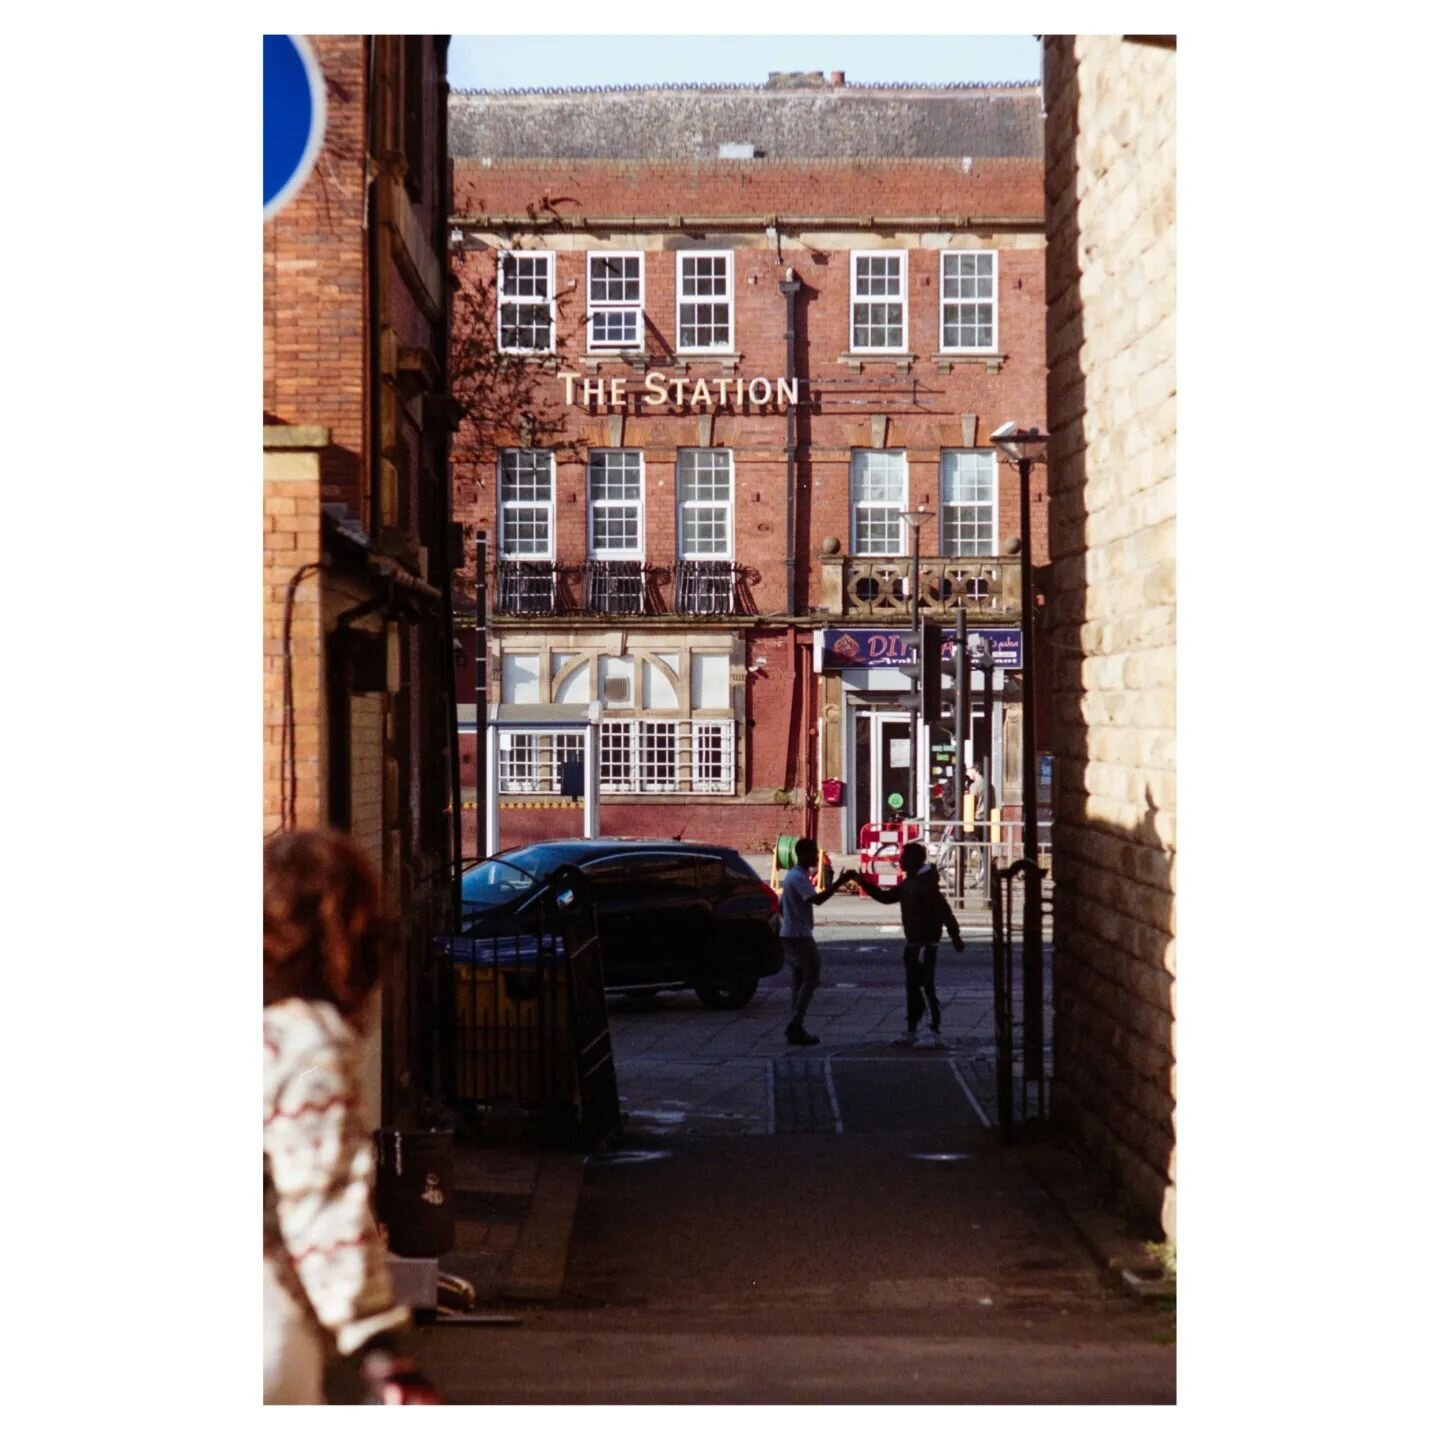 Streets of SHF 

Taken on February's #tycephotowalk

📷 Nikon F
🎞 Fuji Superia 200 (Expired)
Dev by @jandastudiosheffield 
Scanned using a Sony 7iii &amp; @negativelabpro 

#Sheffield #England #VintageNikon #FujiSuperiaFilm #Photography #Architectur